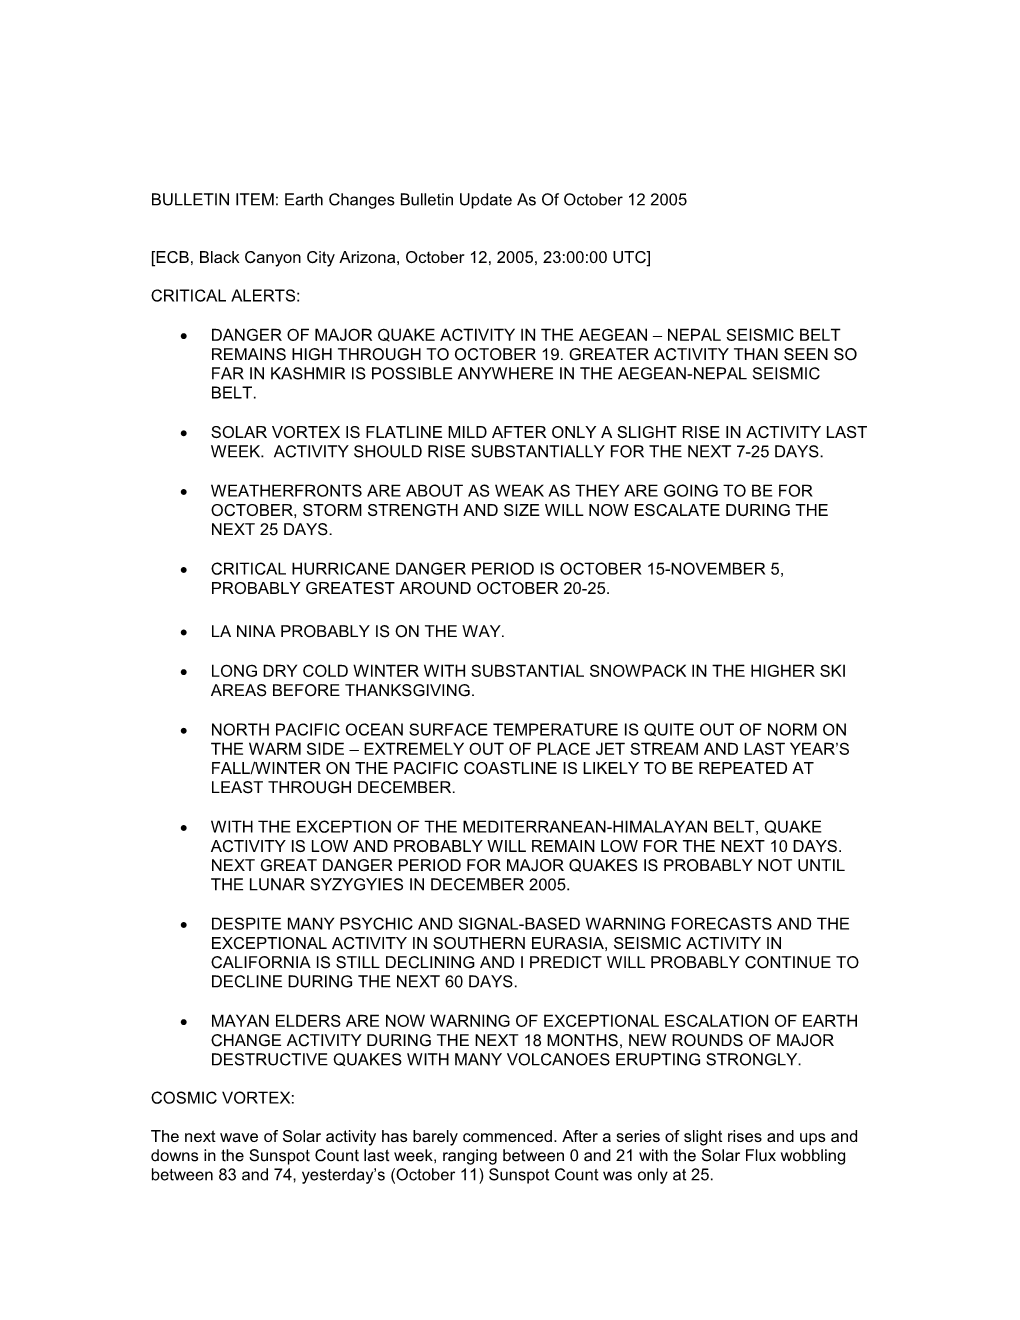 BULLETIN ITEM: Earth Changes Bulletin Update As of September 28 2005